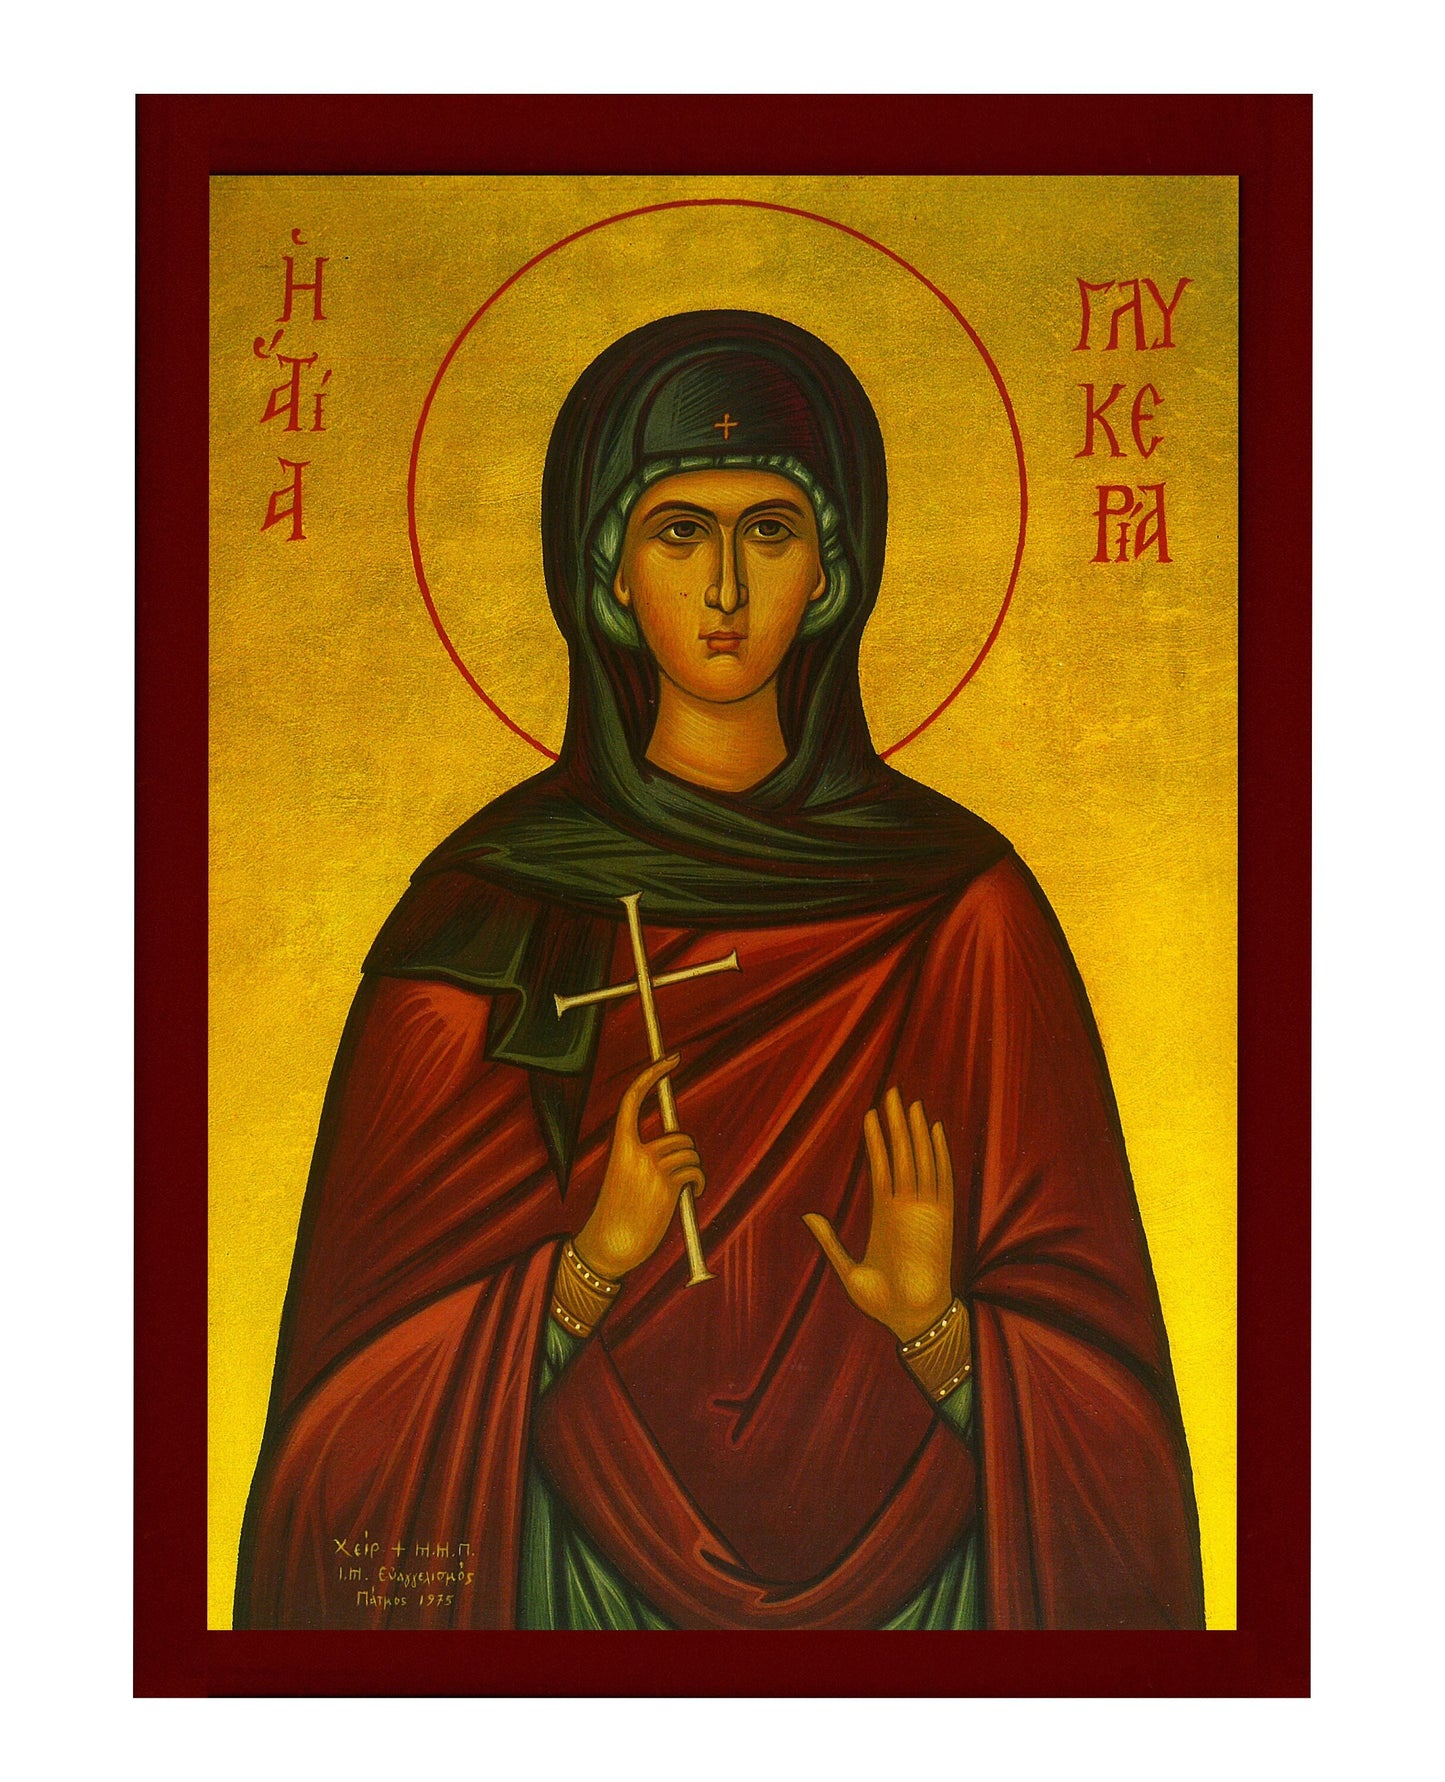 Saint Glykeria icon, Handmade Greek Orthodox icon of St Glyceria, Byzantine art wall hanging icon wood plaque, religious decor TheHolyArt